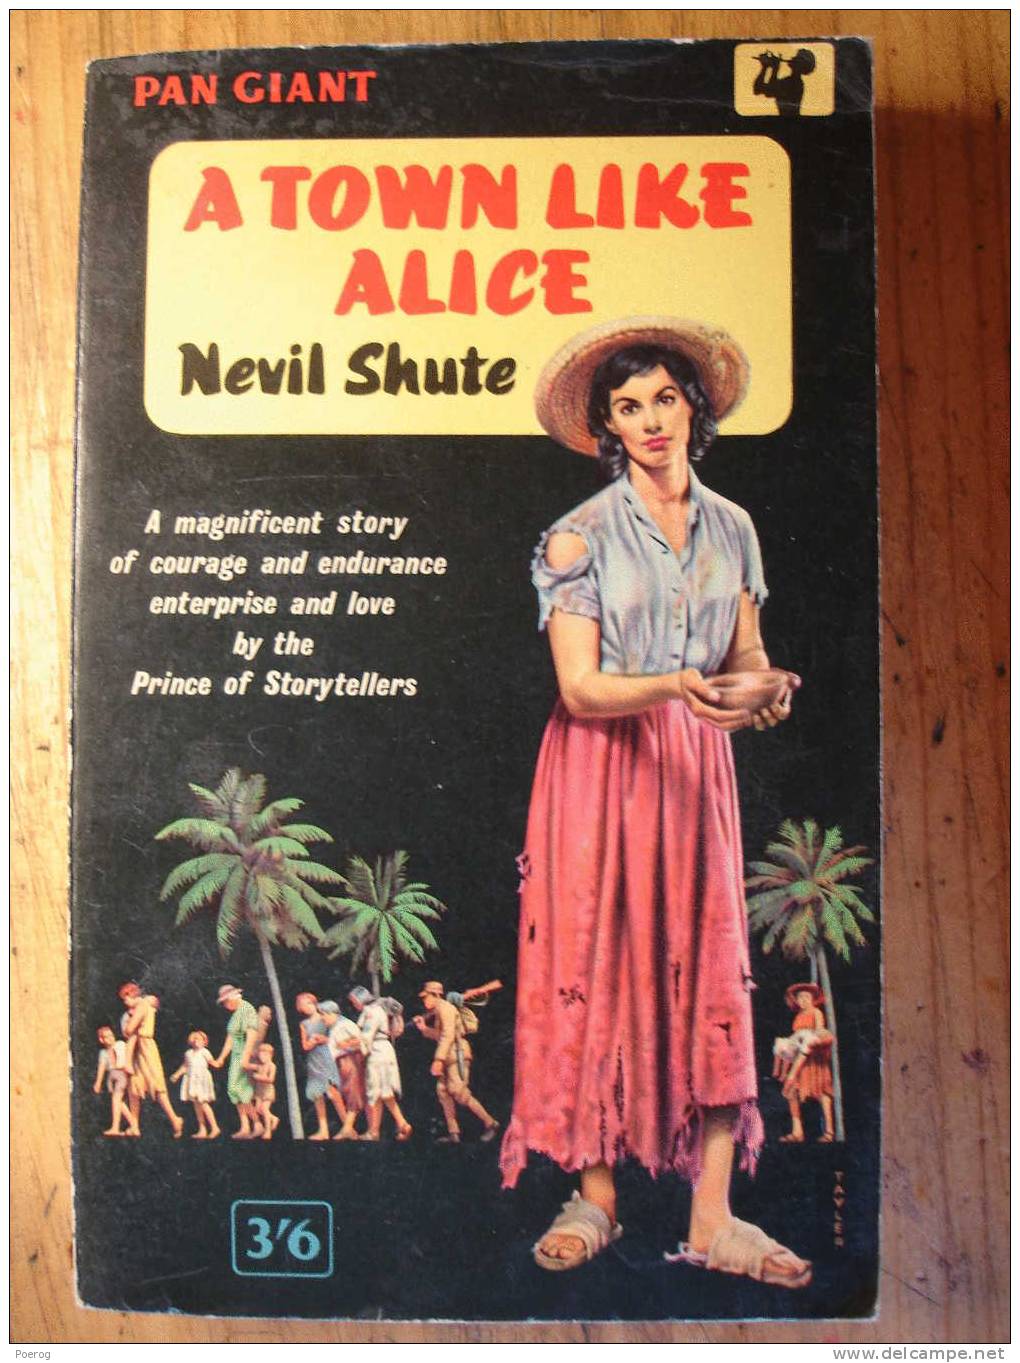 A TOWN LIKE ALICE - NEVIL SHUTE - PAN GIANT - LIVRE EN ANGLAIS Format Poche - 1961 - Fiction